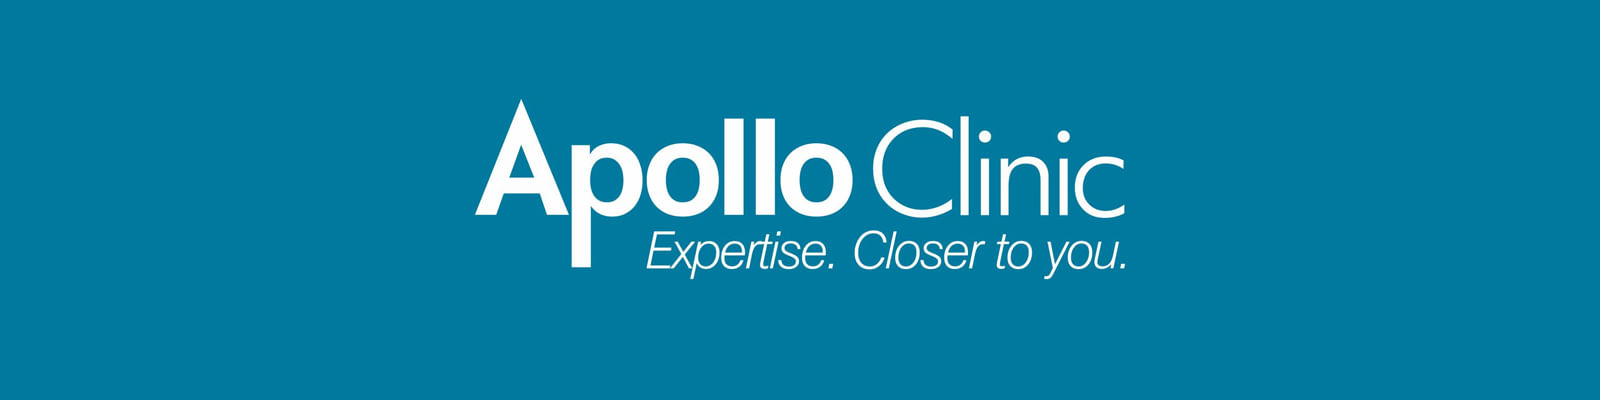 Apollo Clinic, Bora Service, Guwahati